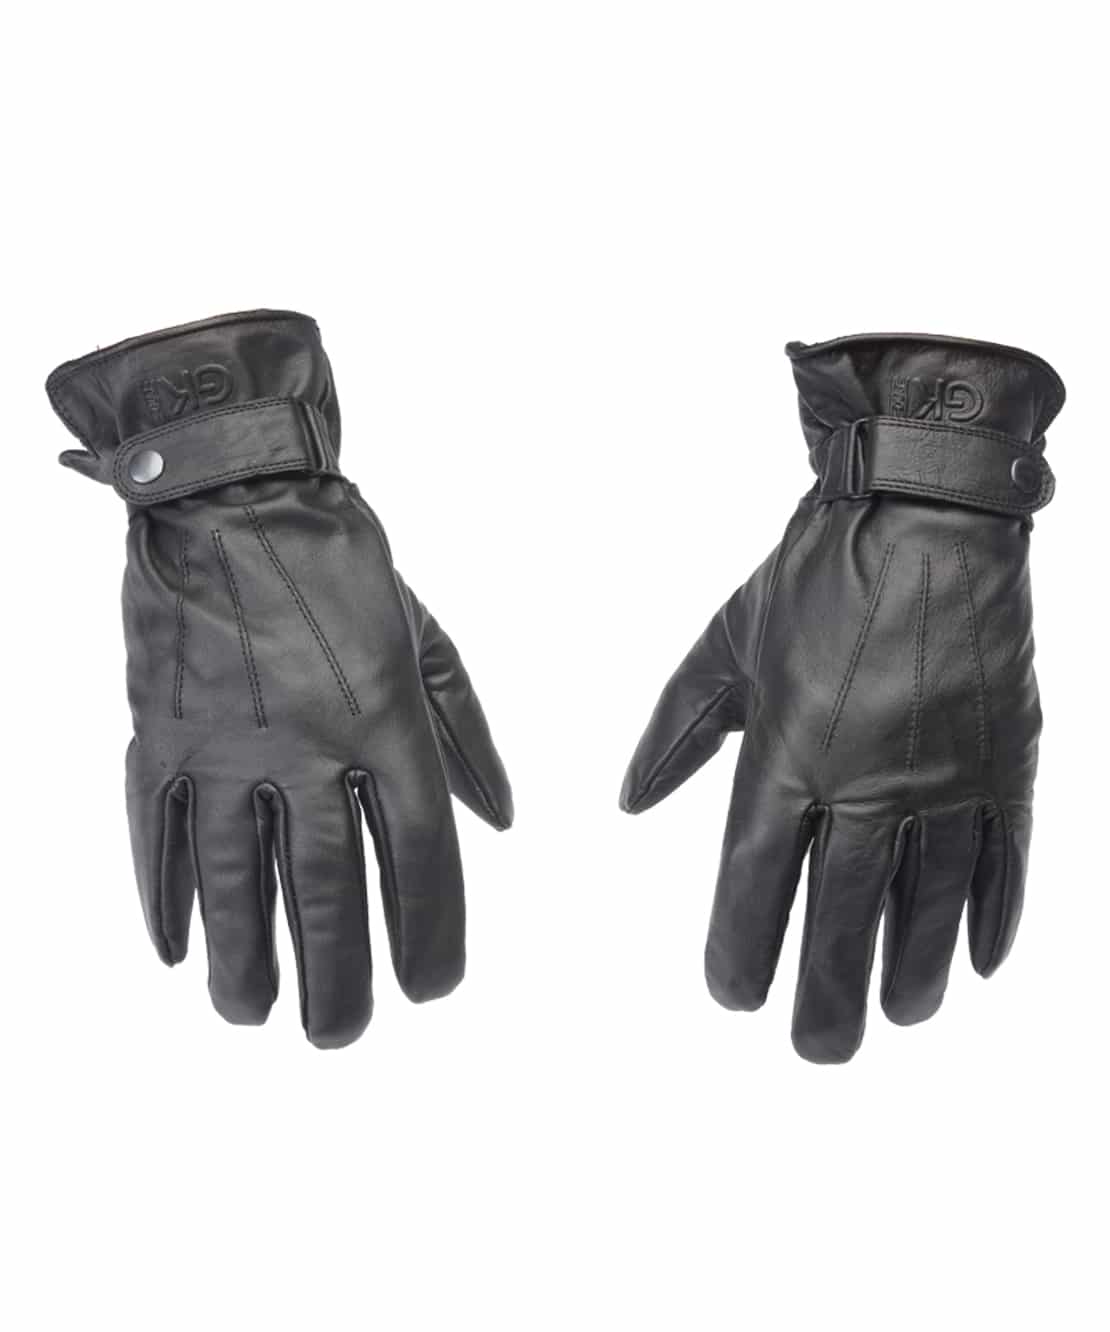 gants combat cuir intervention securite police gendarmerie